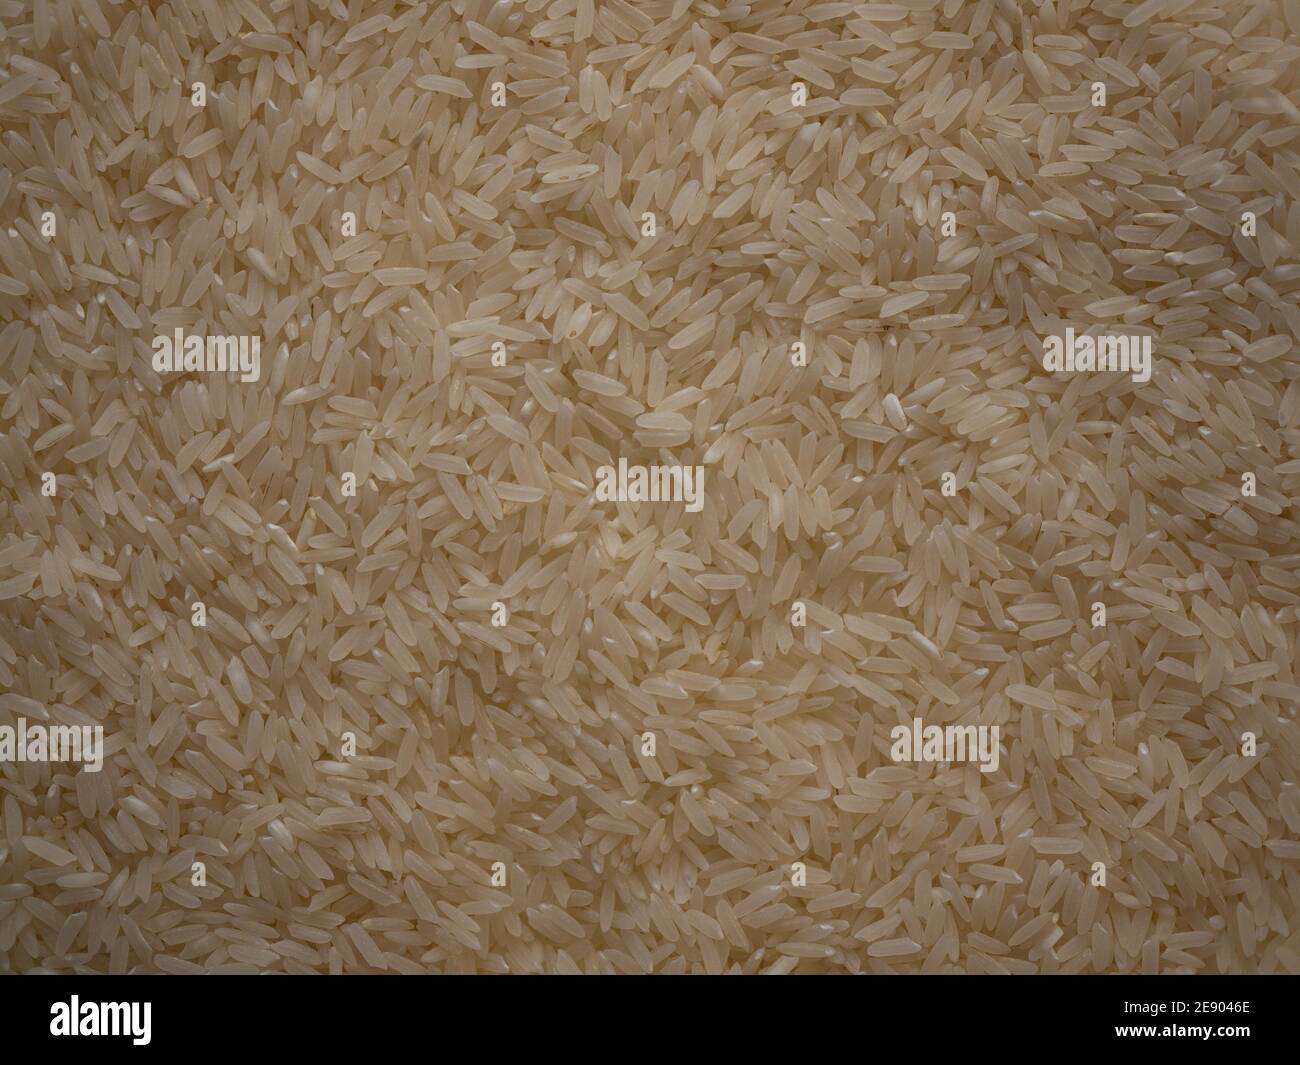 Long grain white rice. Flat lay, top view. Stock Photo